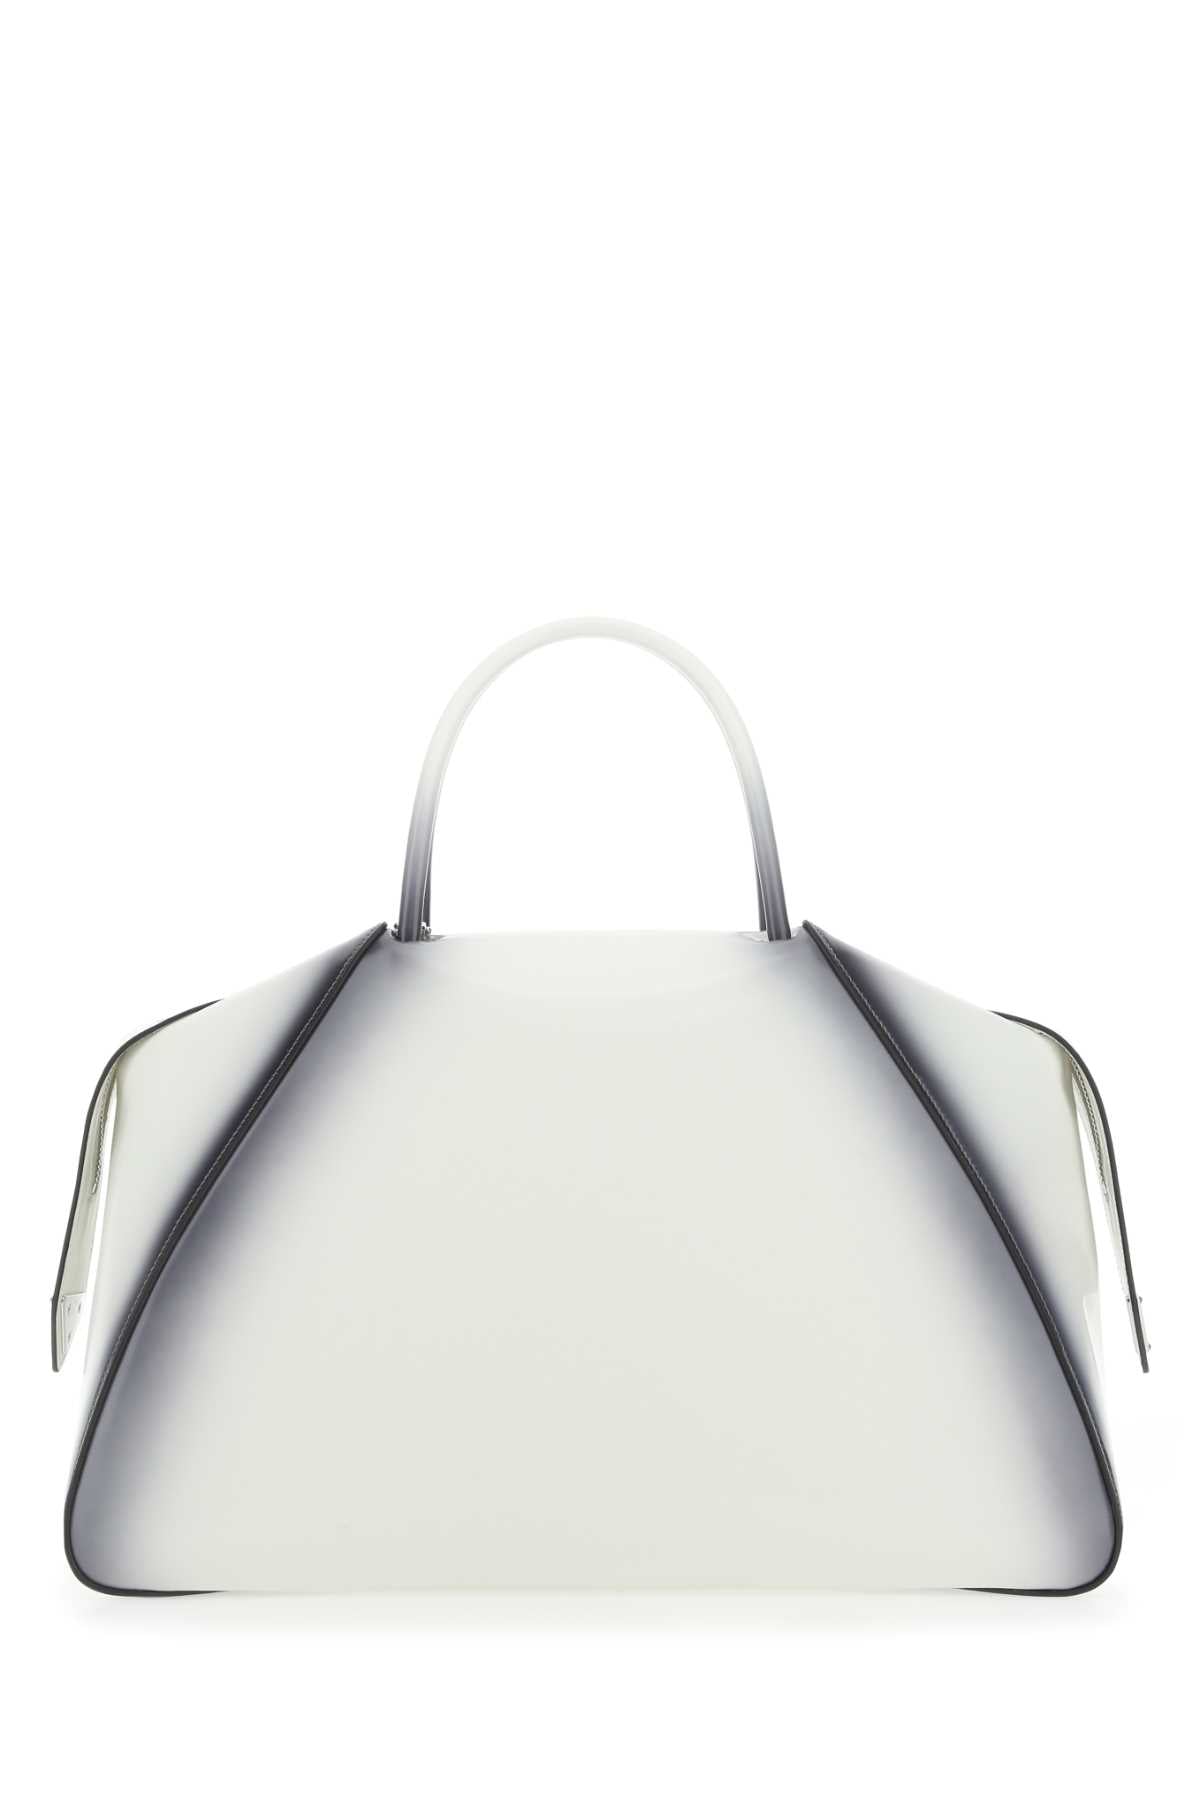 Gradient White Prada Double Saffiano Leather Mini-bag